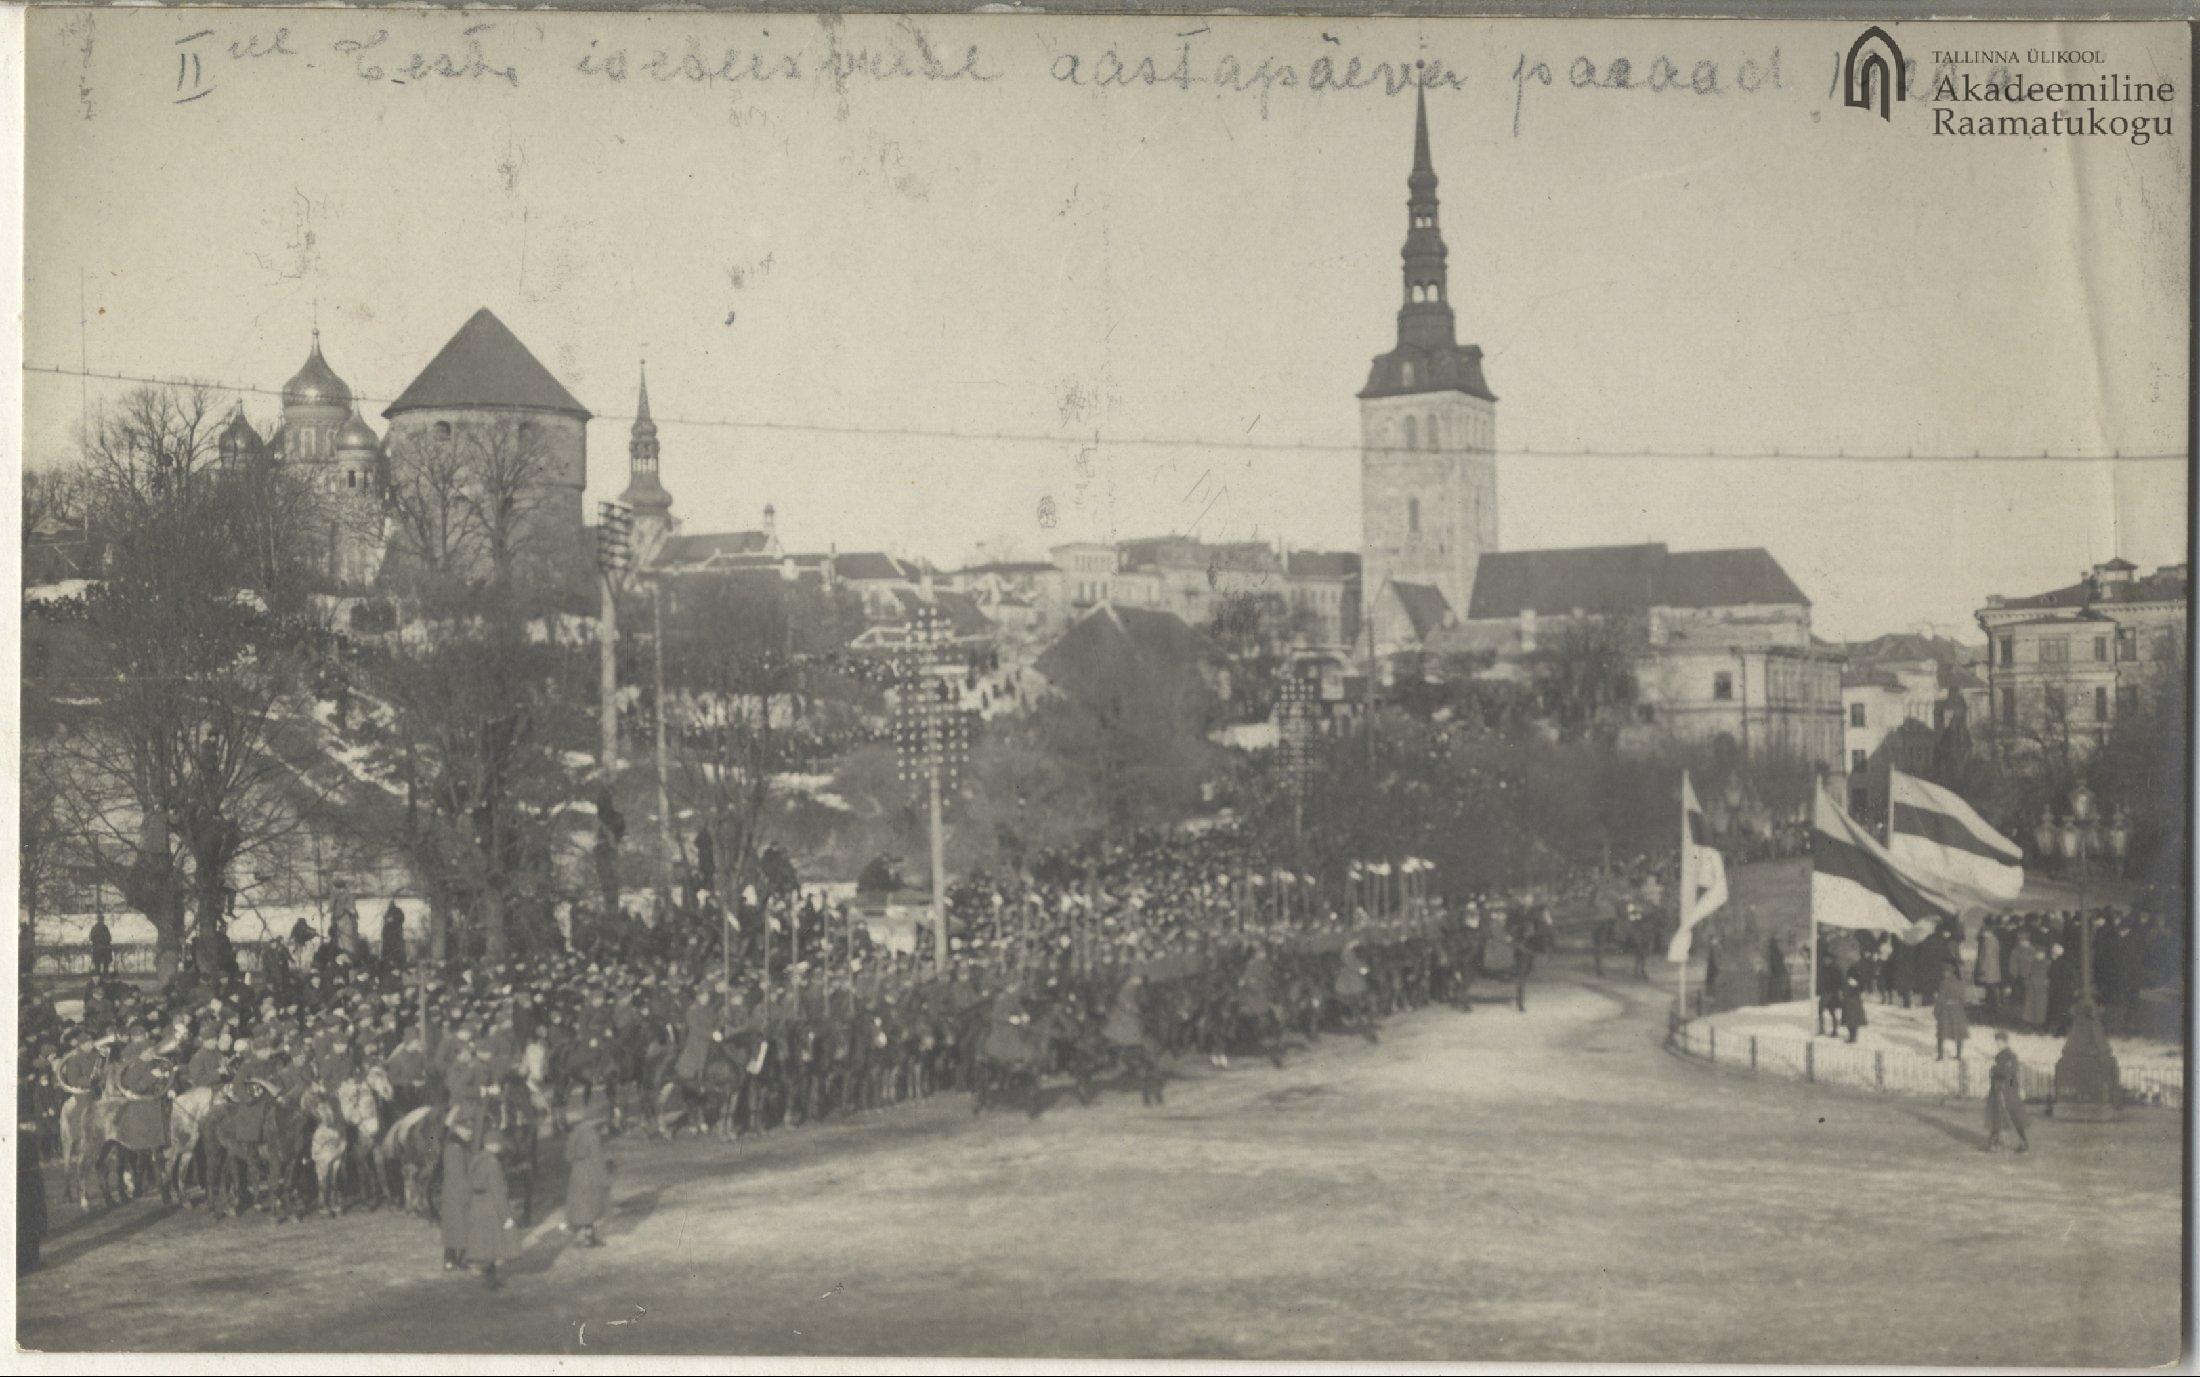 Tallinn. Paradise of the Anniversary of Estonian Independence 24.02.1920 in Tallinn Peetri Square.